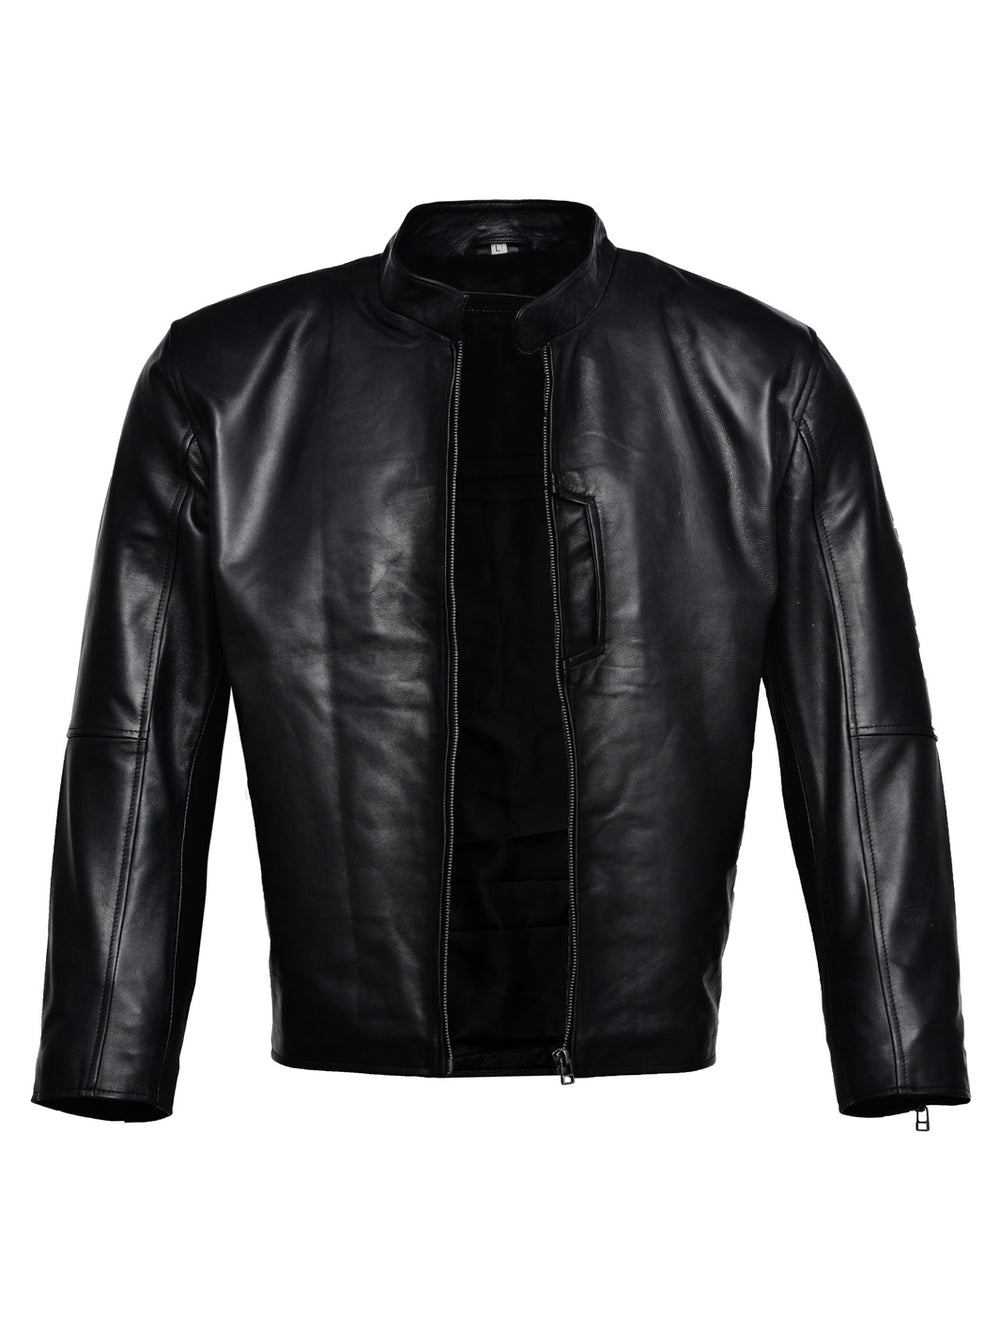 Black Leather Jacket Men Australia